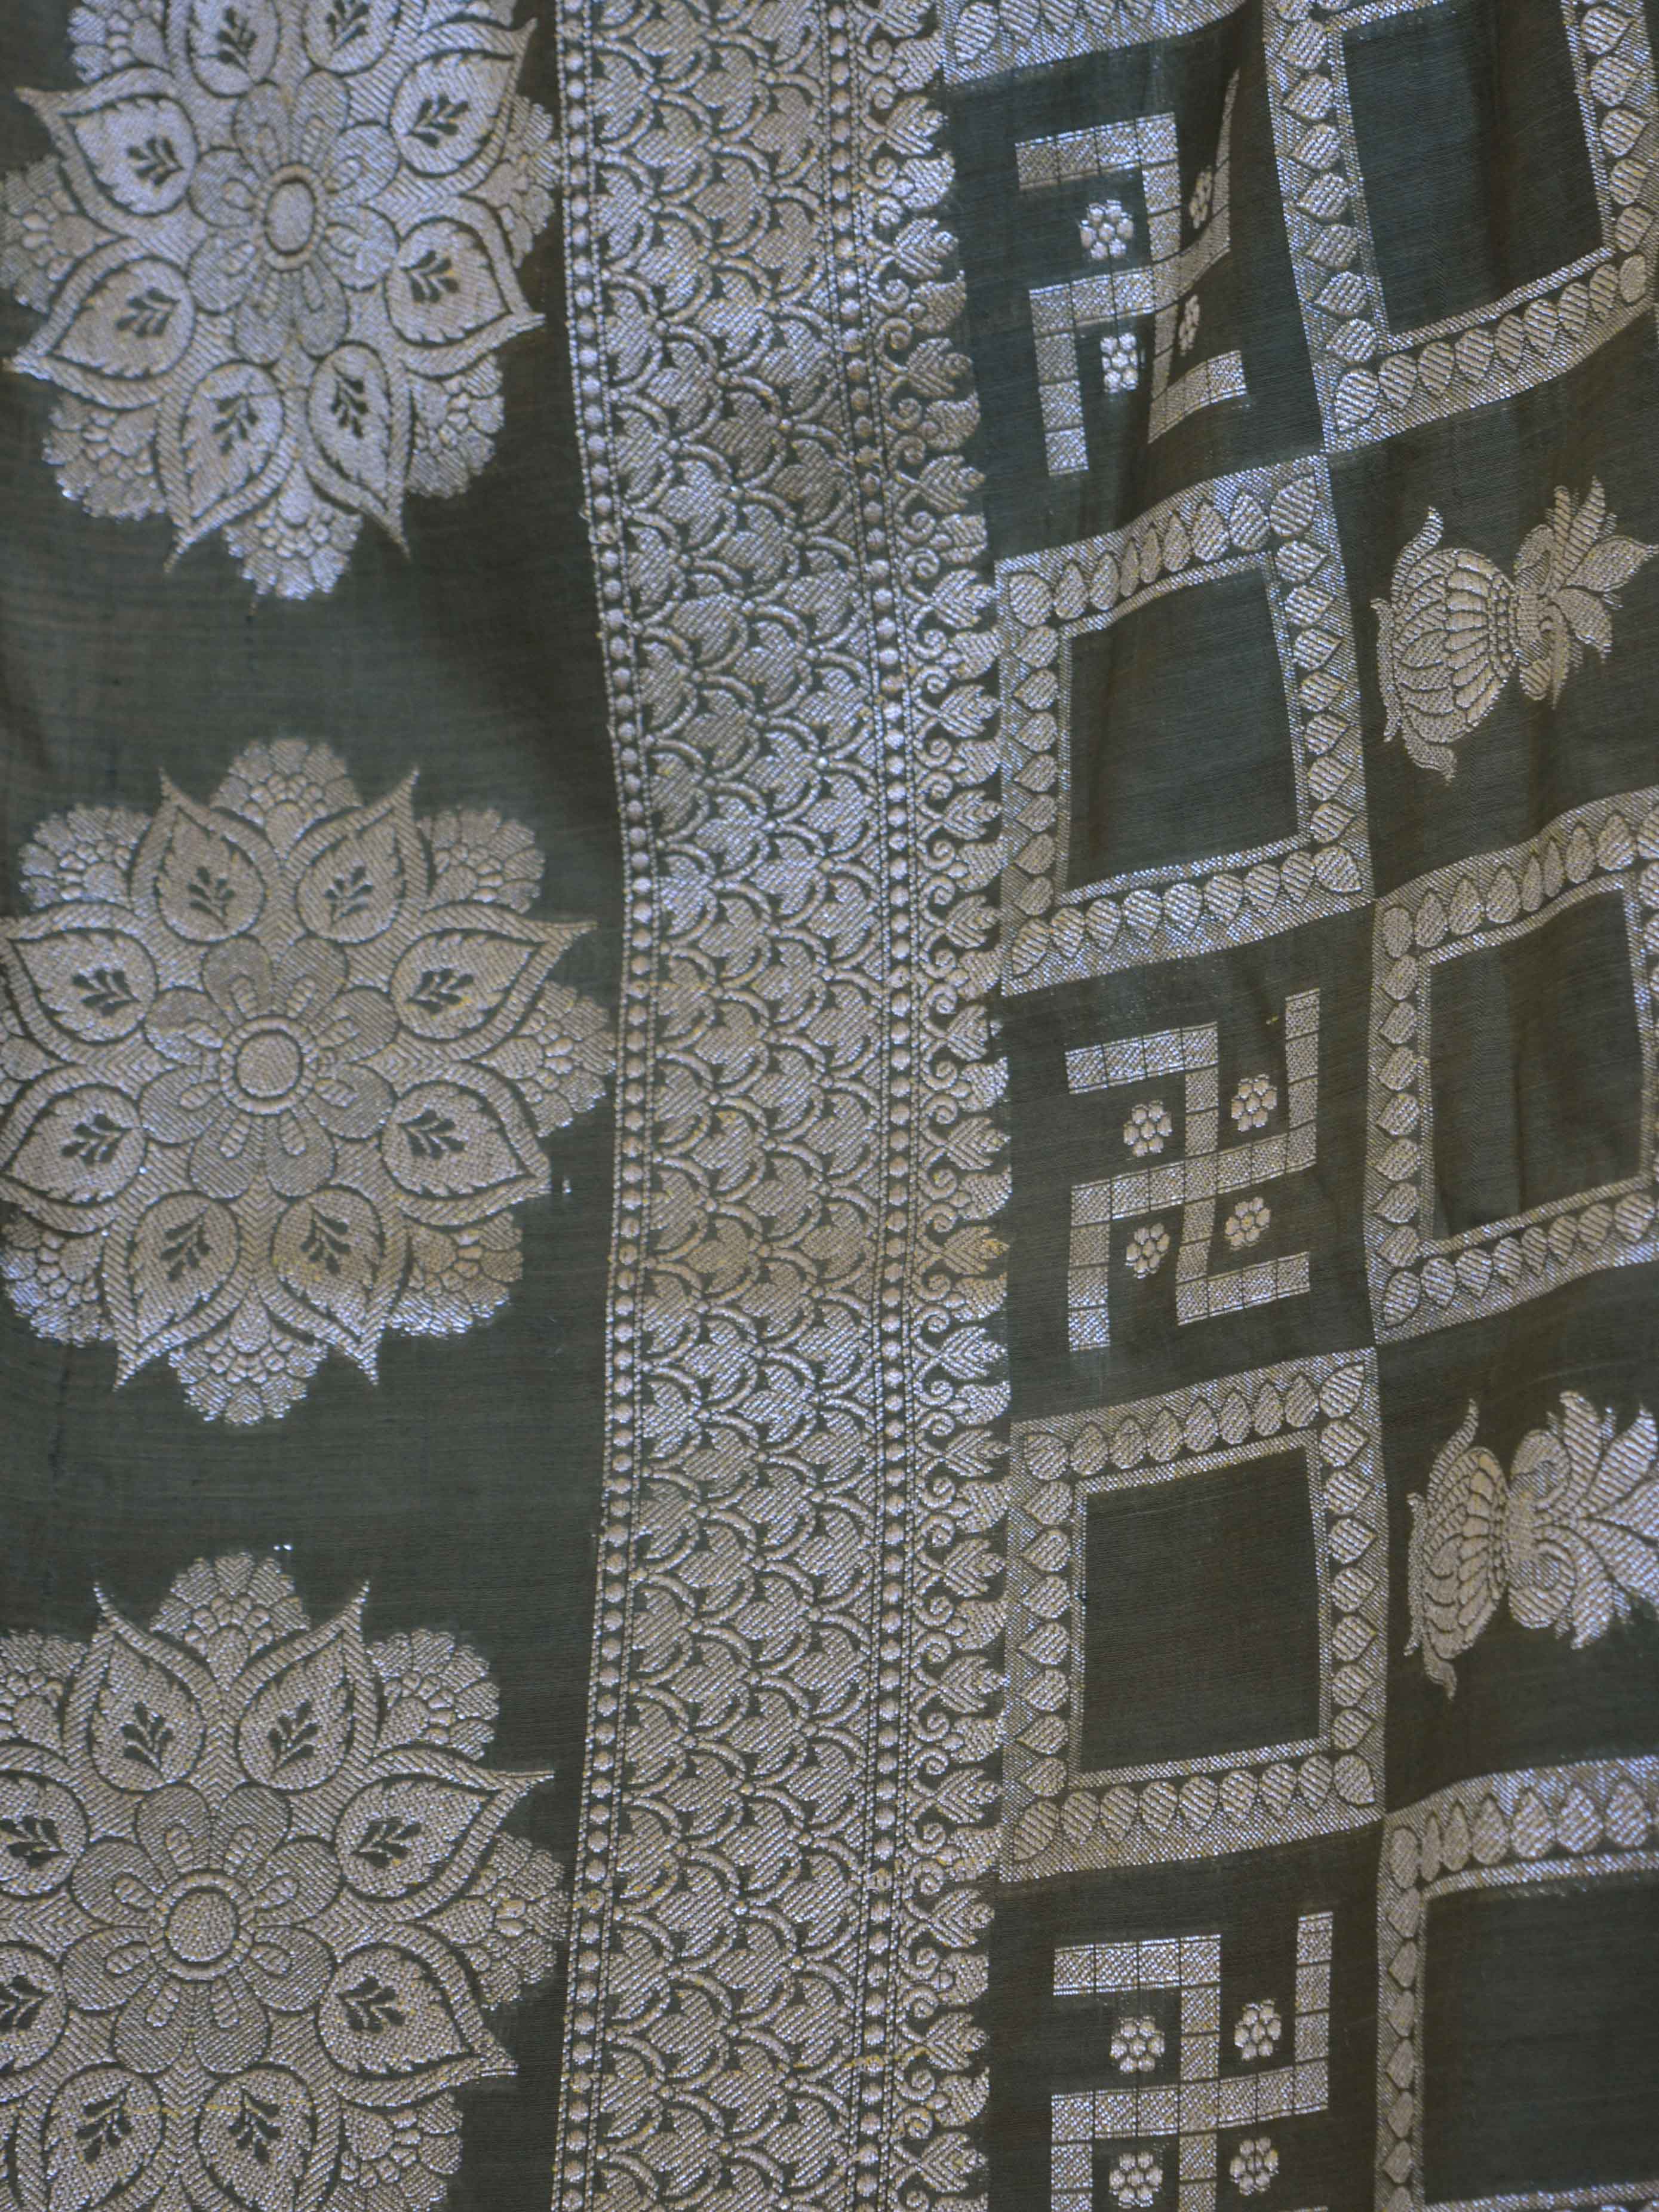 Banarasee Cotton Silk Zari Woven Swastik Design Saree-Olive Green